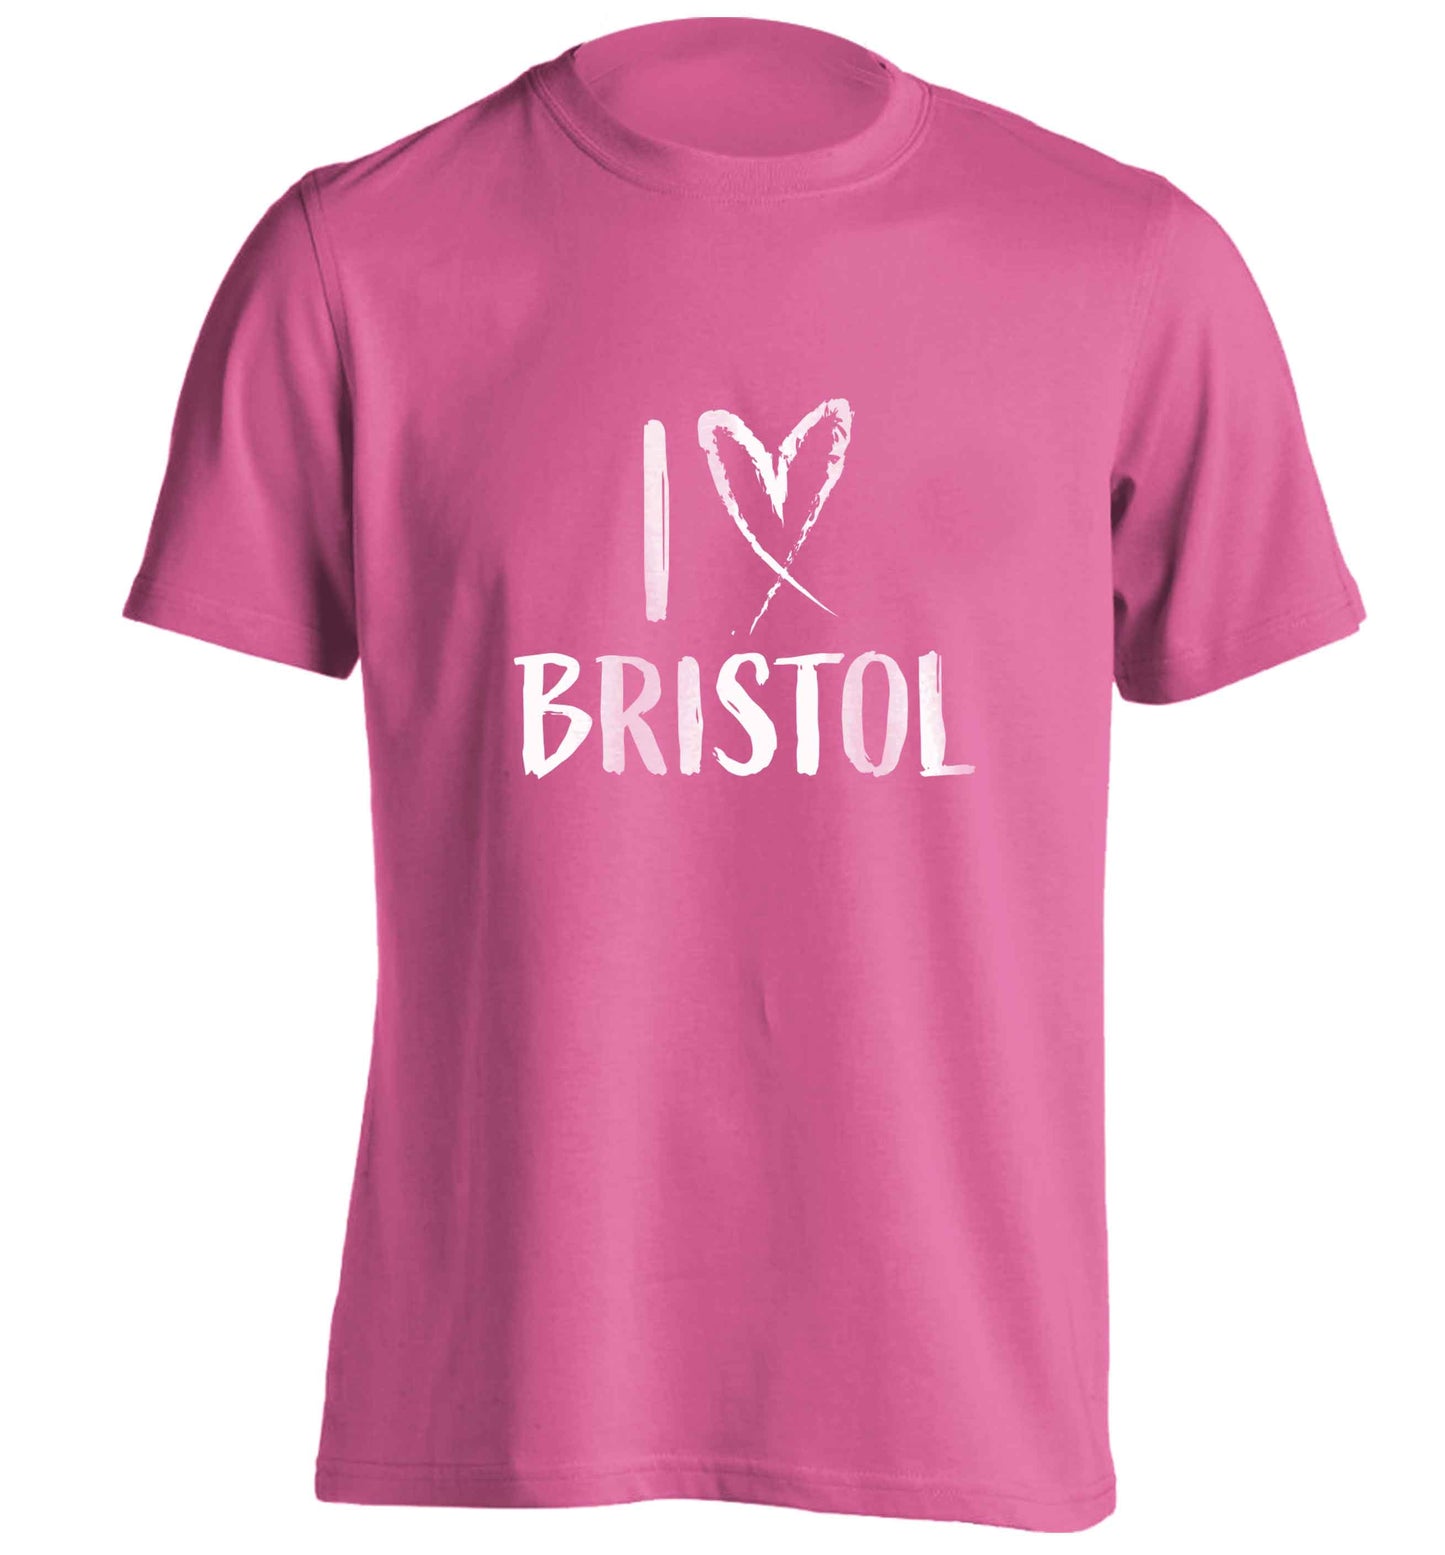 I love Bristol adults unisex pink Tshirt 2XL